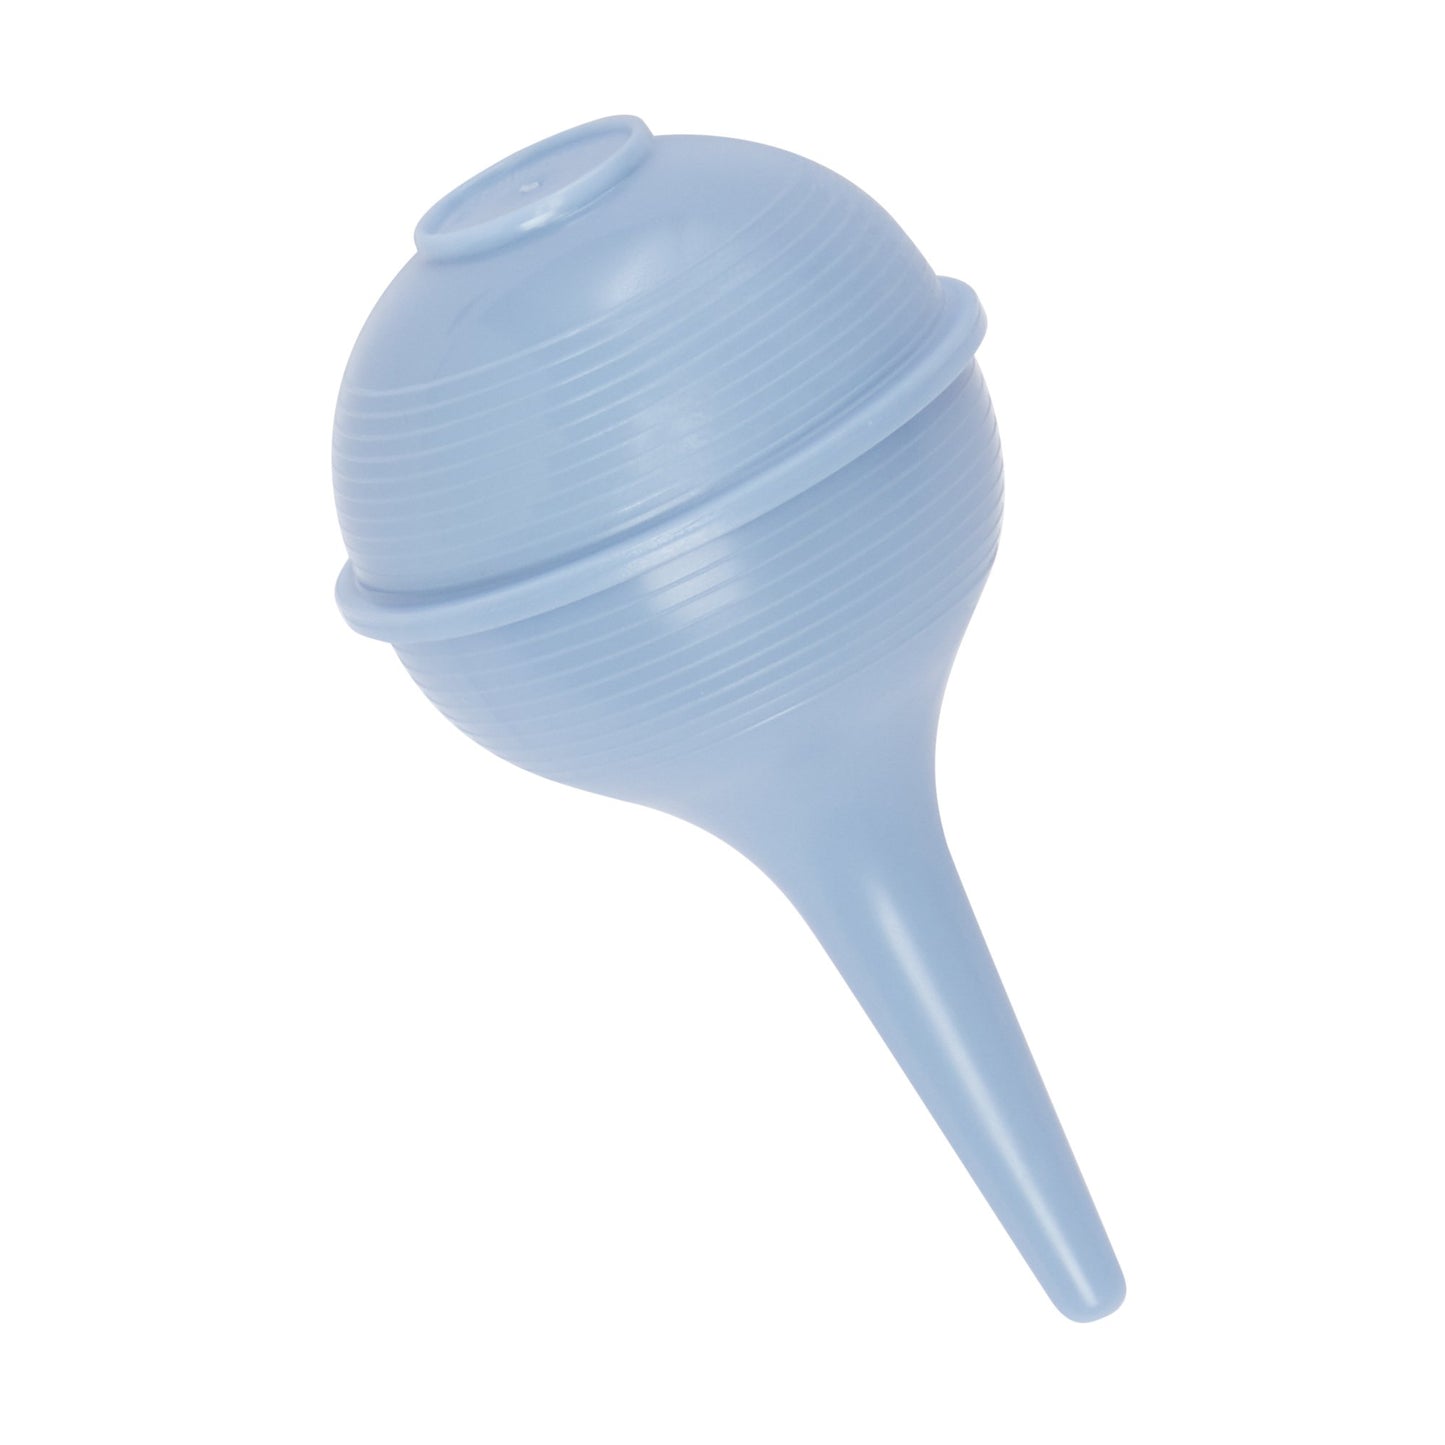 Bulb Syringe for Ear Ulcer, 2 oz Disposable, 50 count